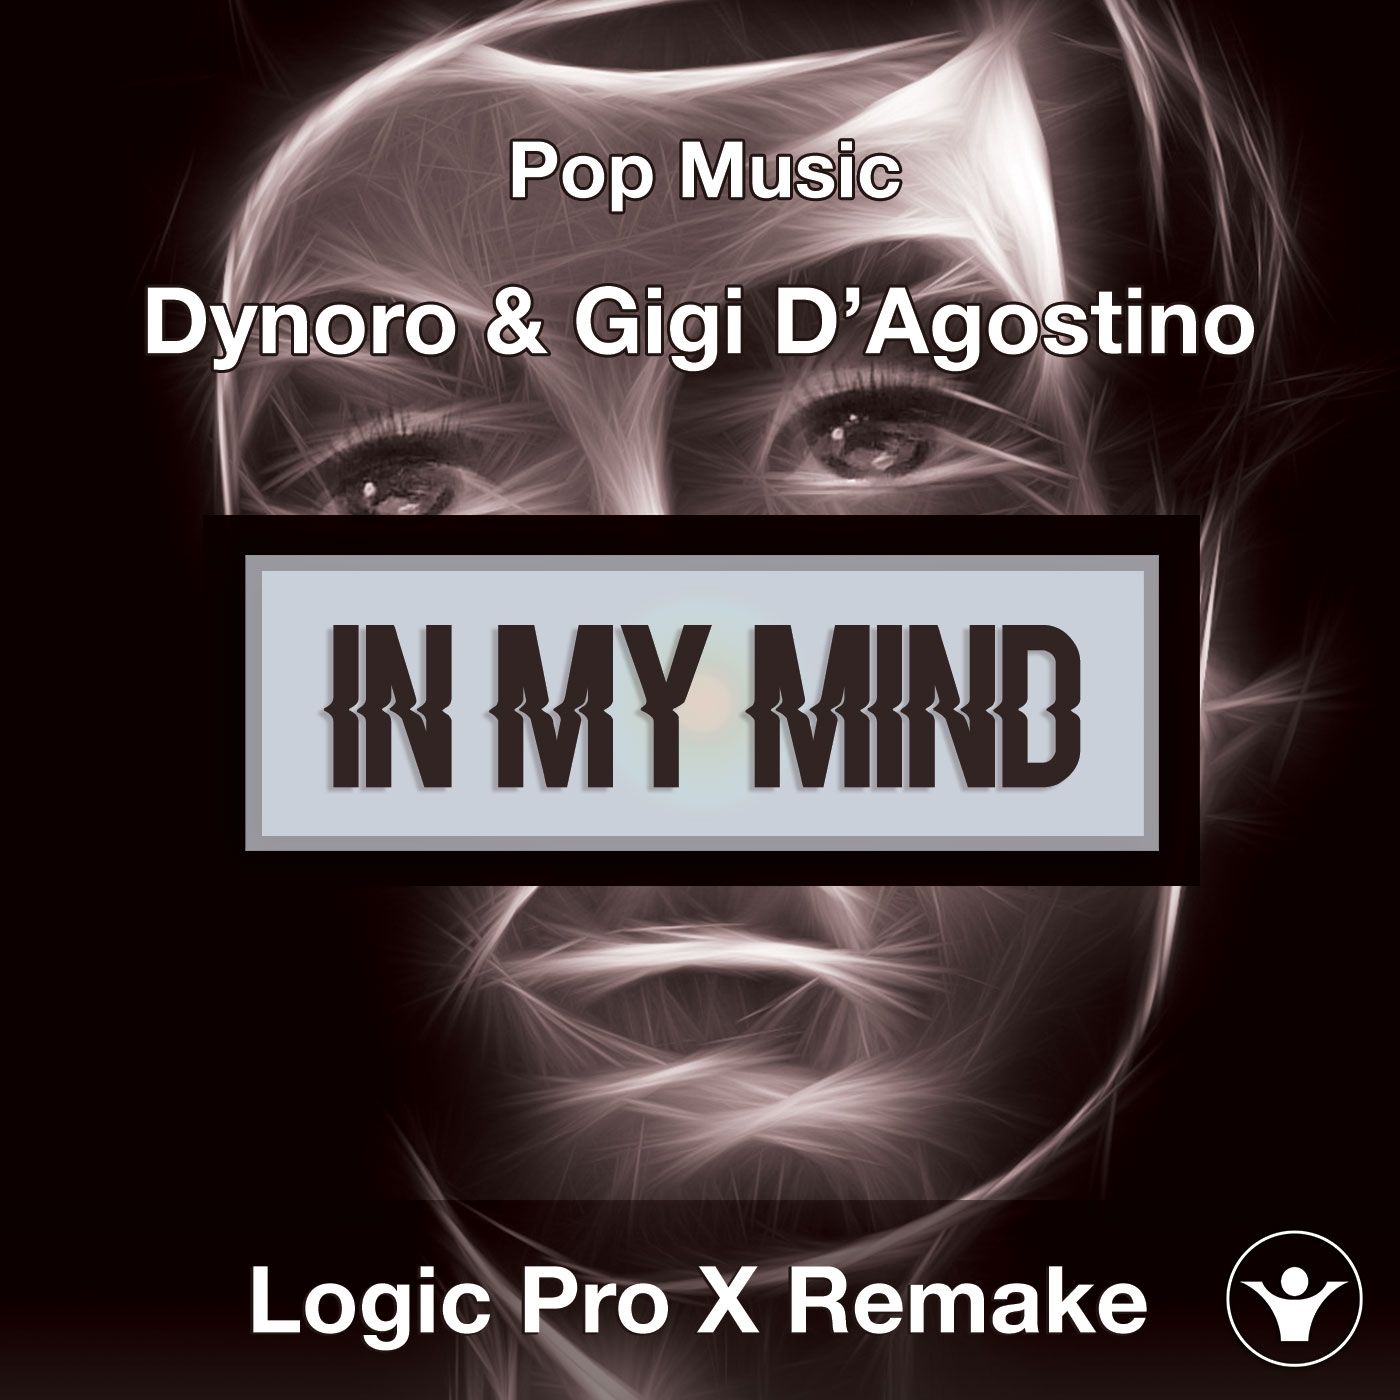 Access In My Mind (Dynoro & Gigi D'Agostino) Logic Pro X Remake